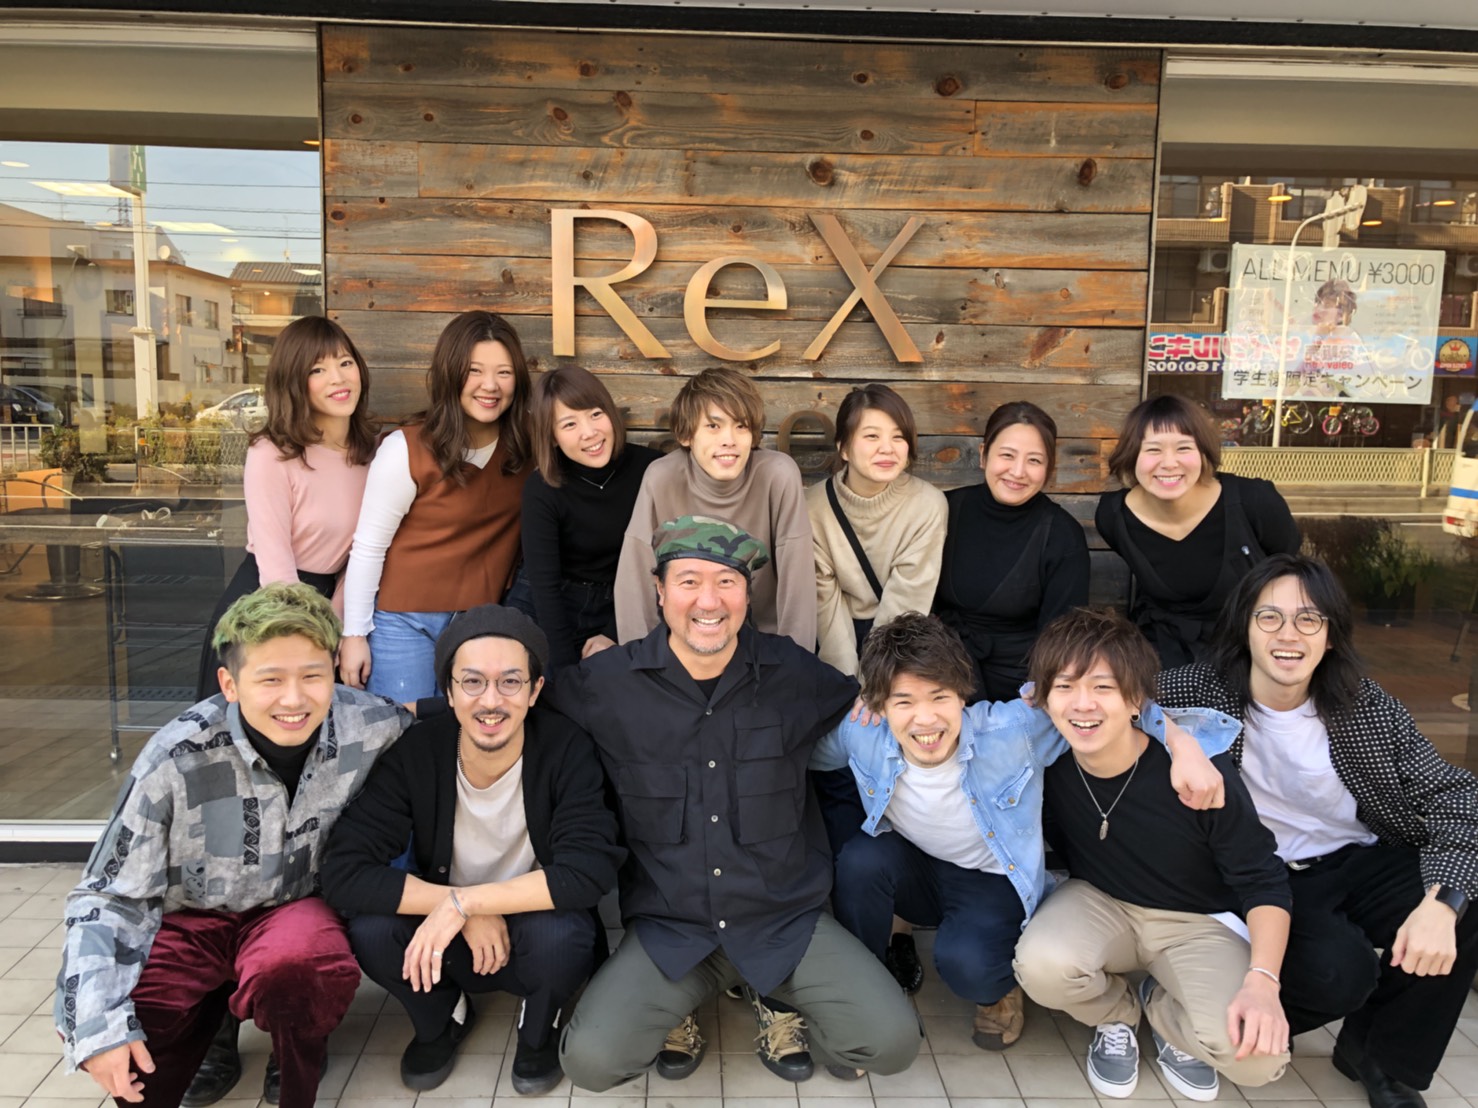 Rex グループ 年始 年末のお知らせ Rex Hair International 美容院 美容室 心斎橋を中心に扇町 吹田 上新庄 でお待ちしております